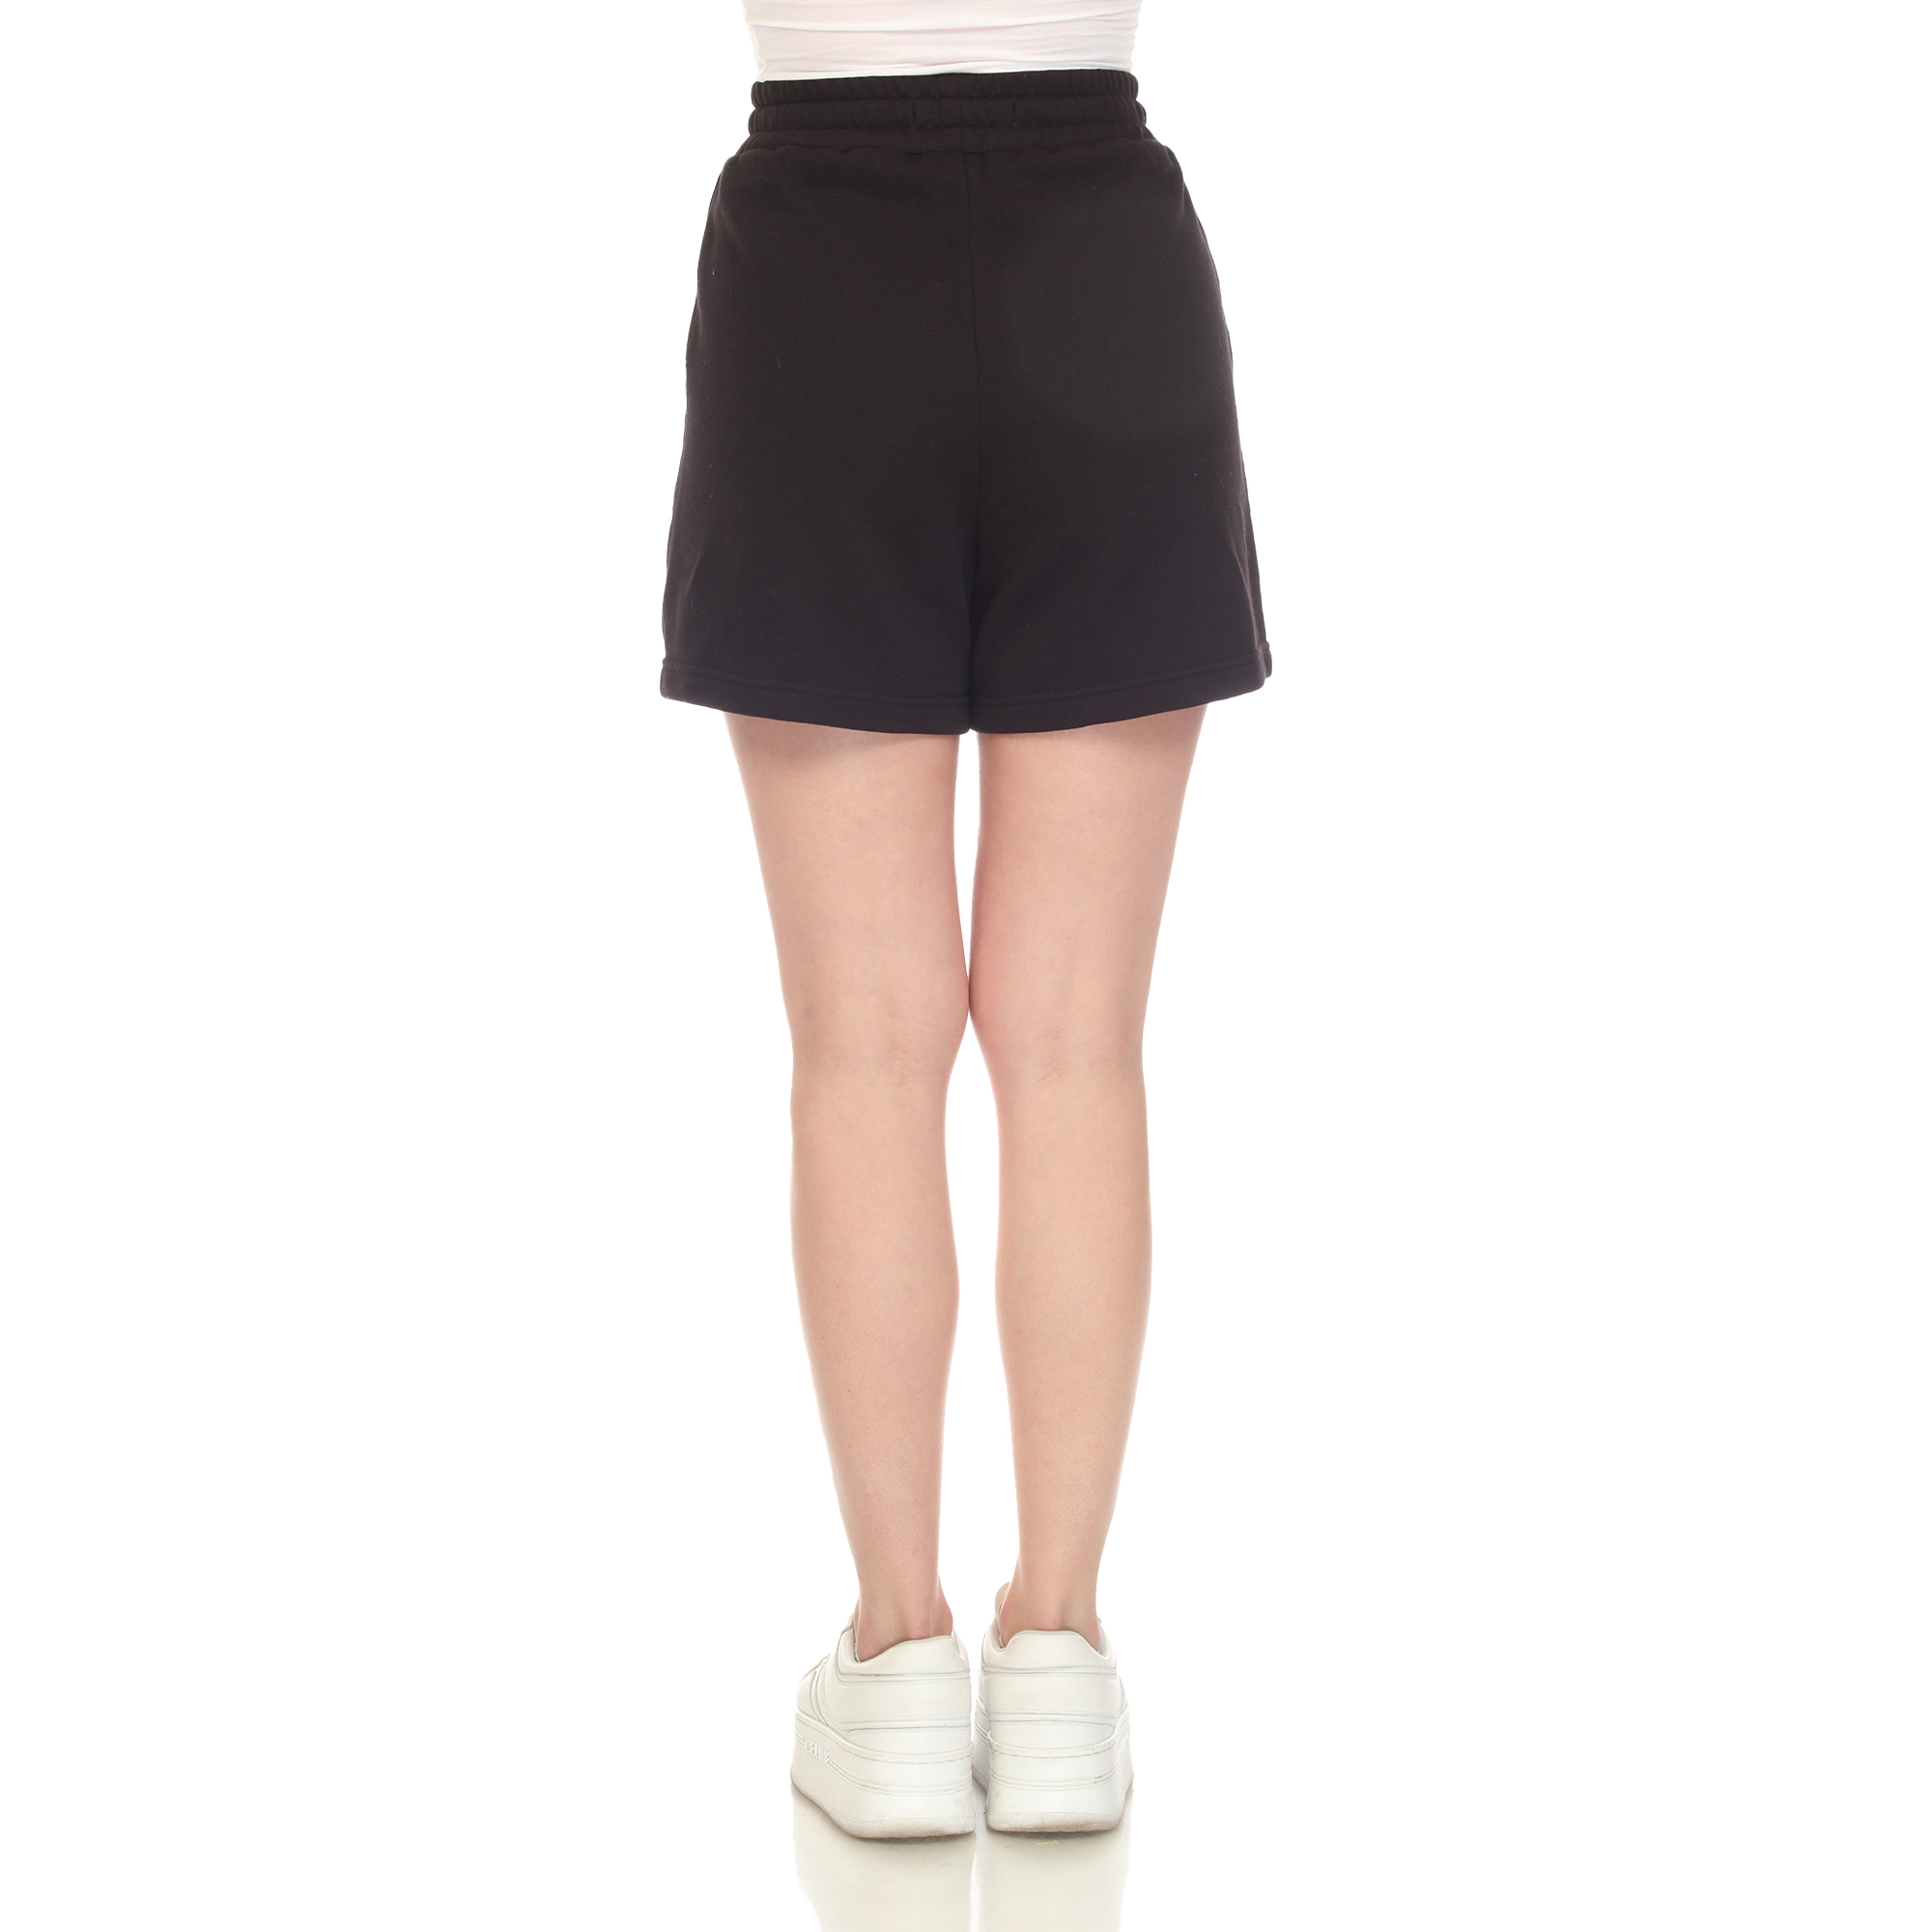 White Mark Women's Super Soft Drawstring Waistband Sweat Shorts - Navy, X-Large